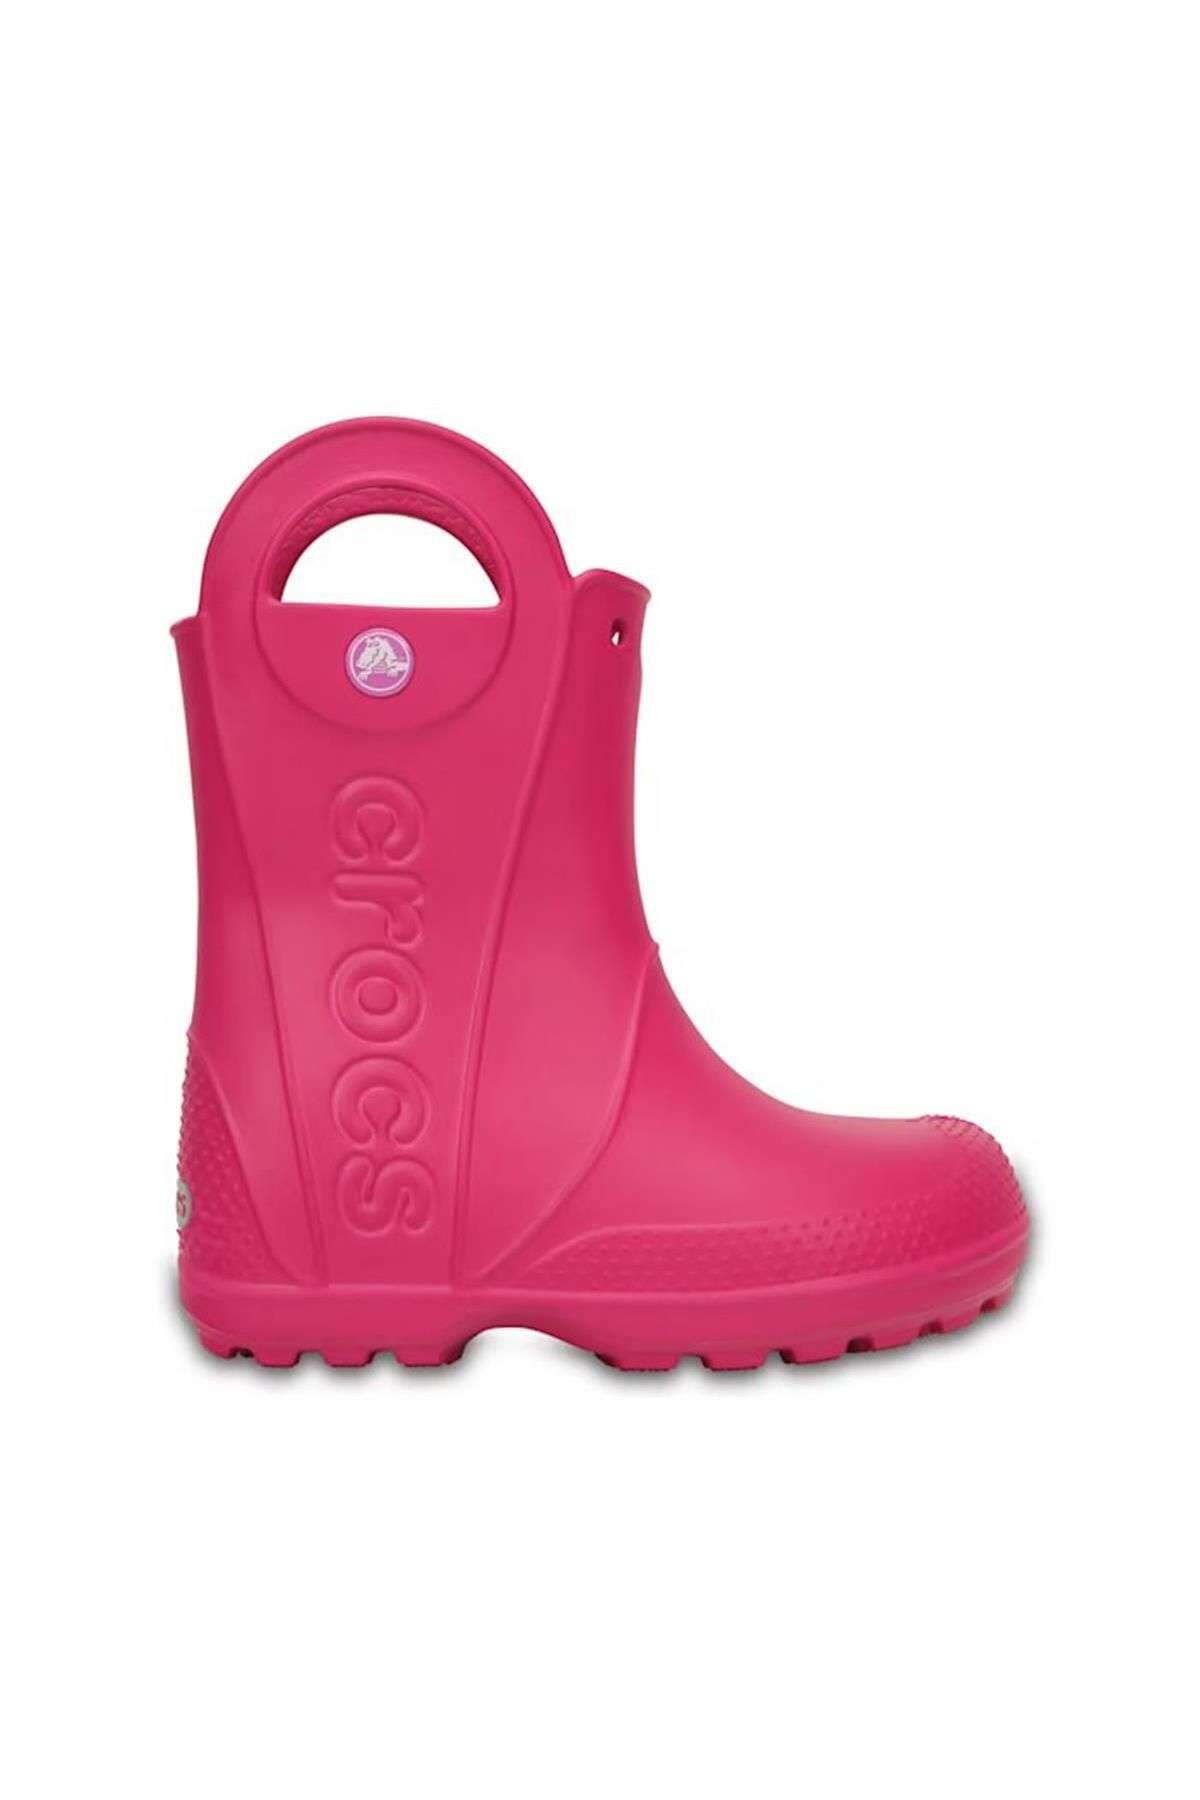 Crocs Handle It Rain Boot Çocuk Yağmur Botu 12803-6x0 Candy Pink